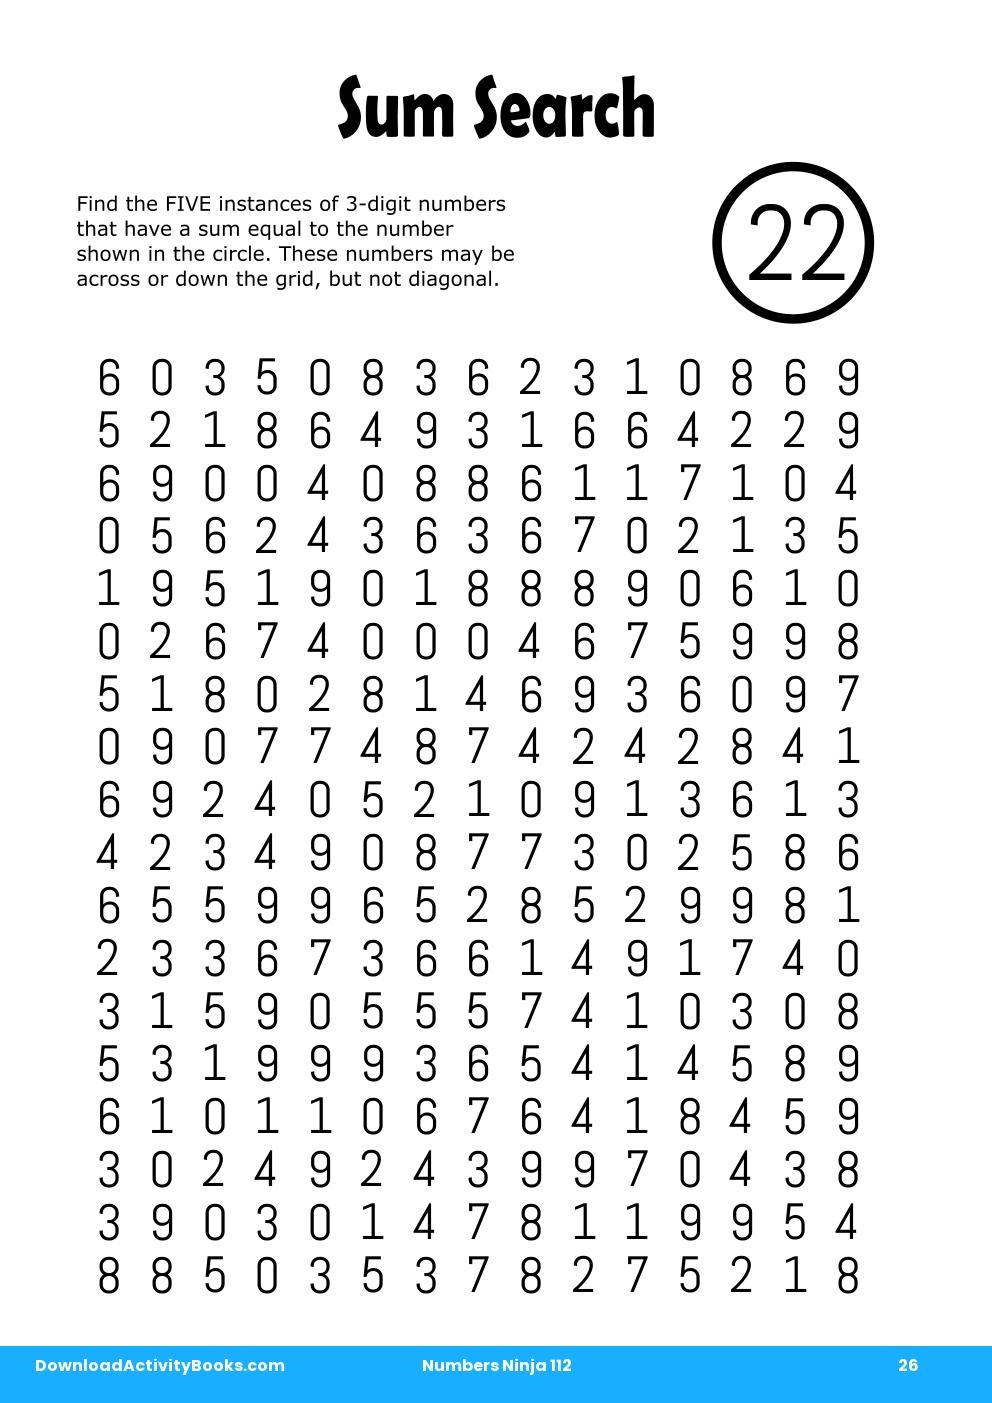 Sum Search in Numbers Ninja 112